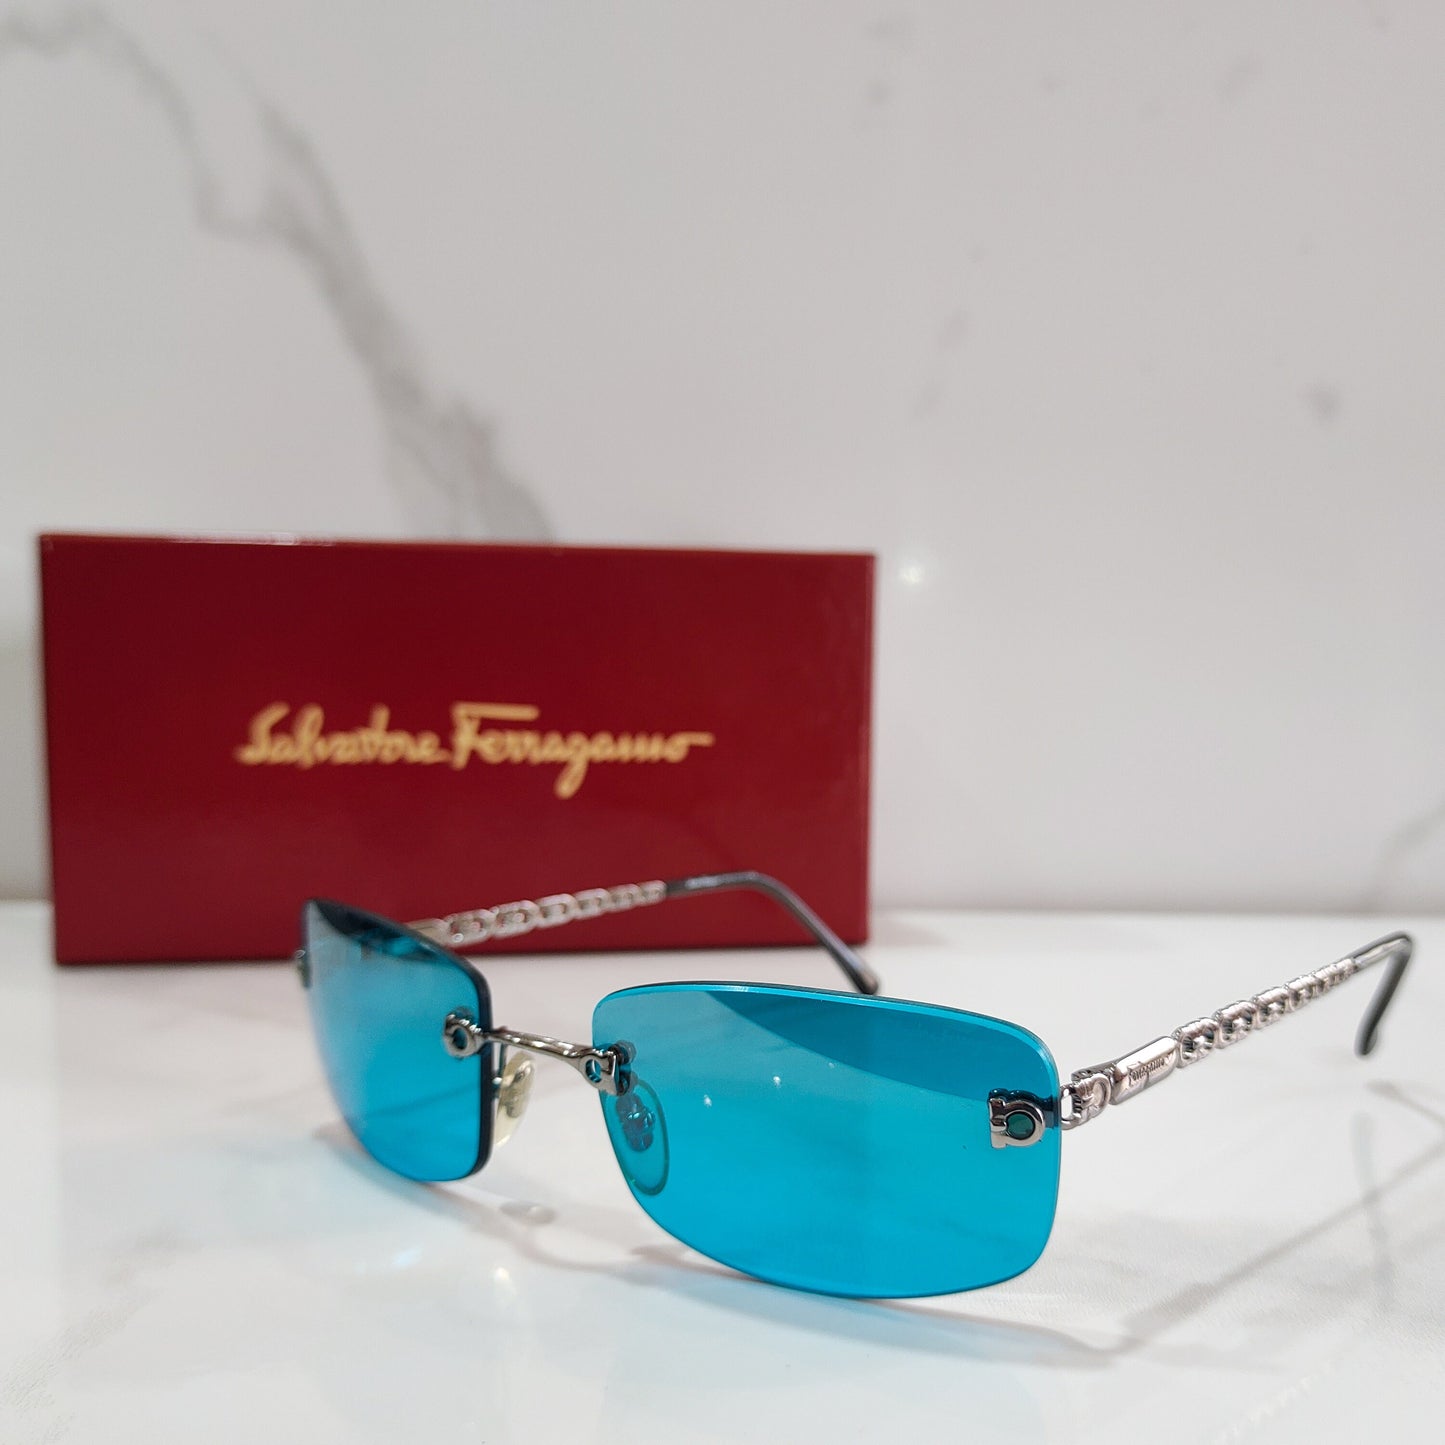 Ferragamo 型号 1036 无框太阳镜 rimeless bezel brille 90 年代色调